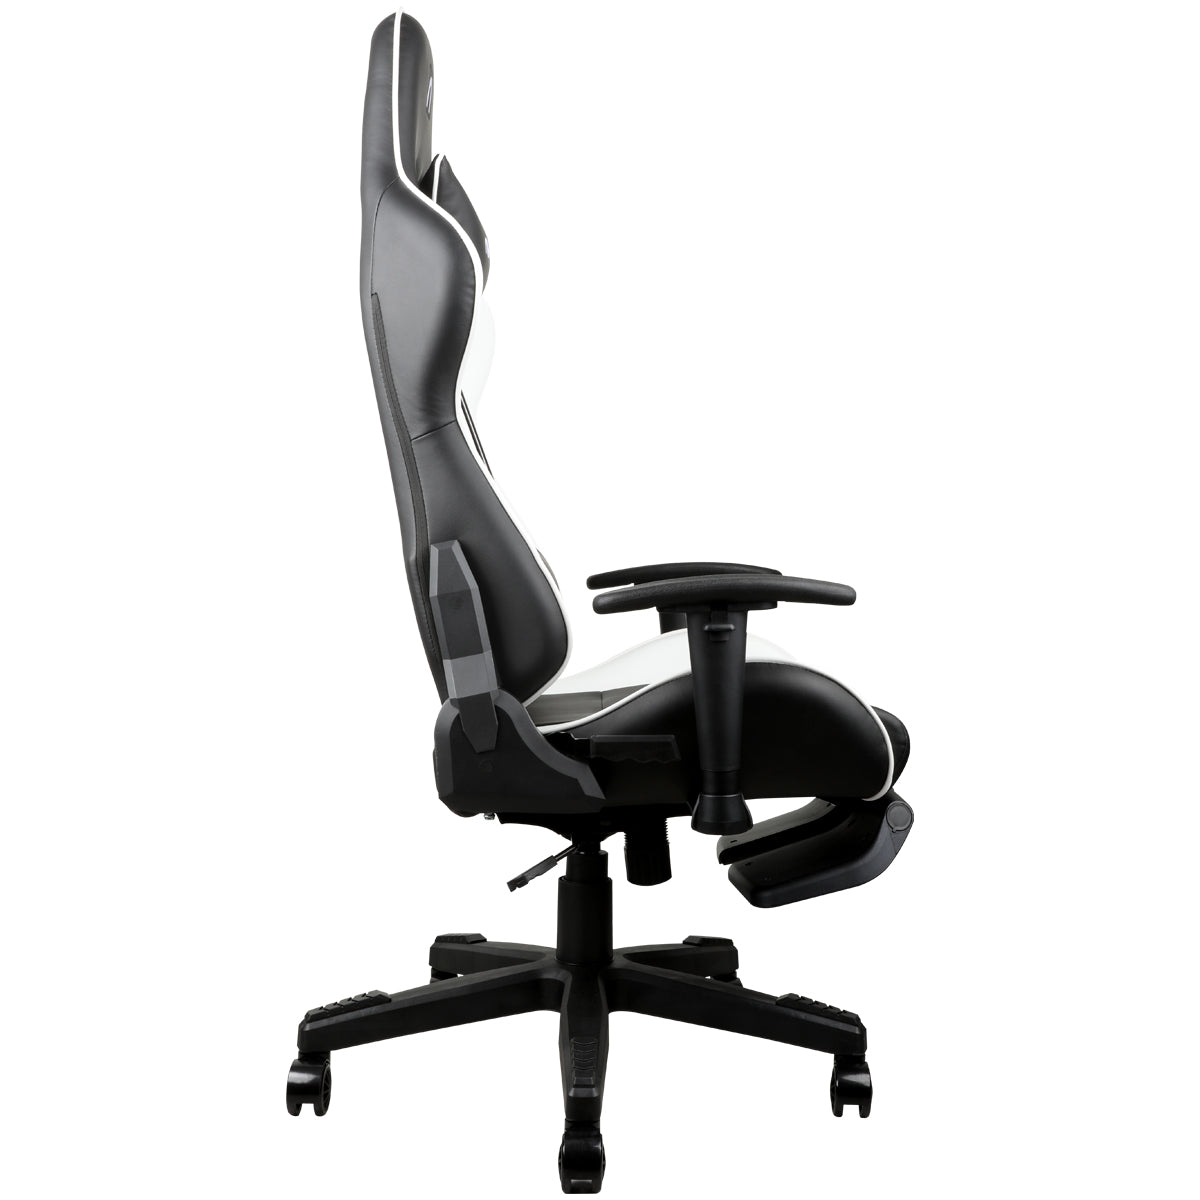 ABKO AGC21 韓國 Gaming Chair 電競椅 連腳托 遊戲扶手椅 高背椅 Armchair 辨公室座椅 大班椅